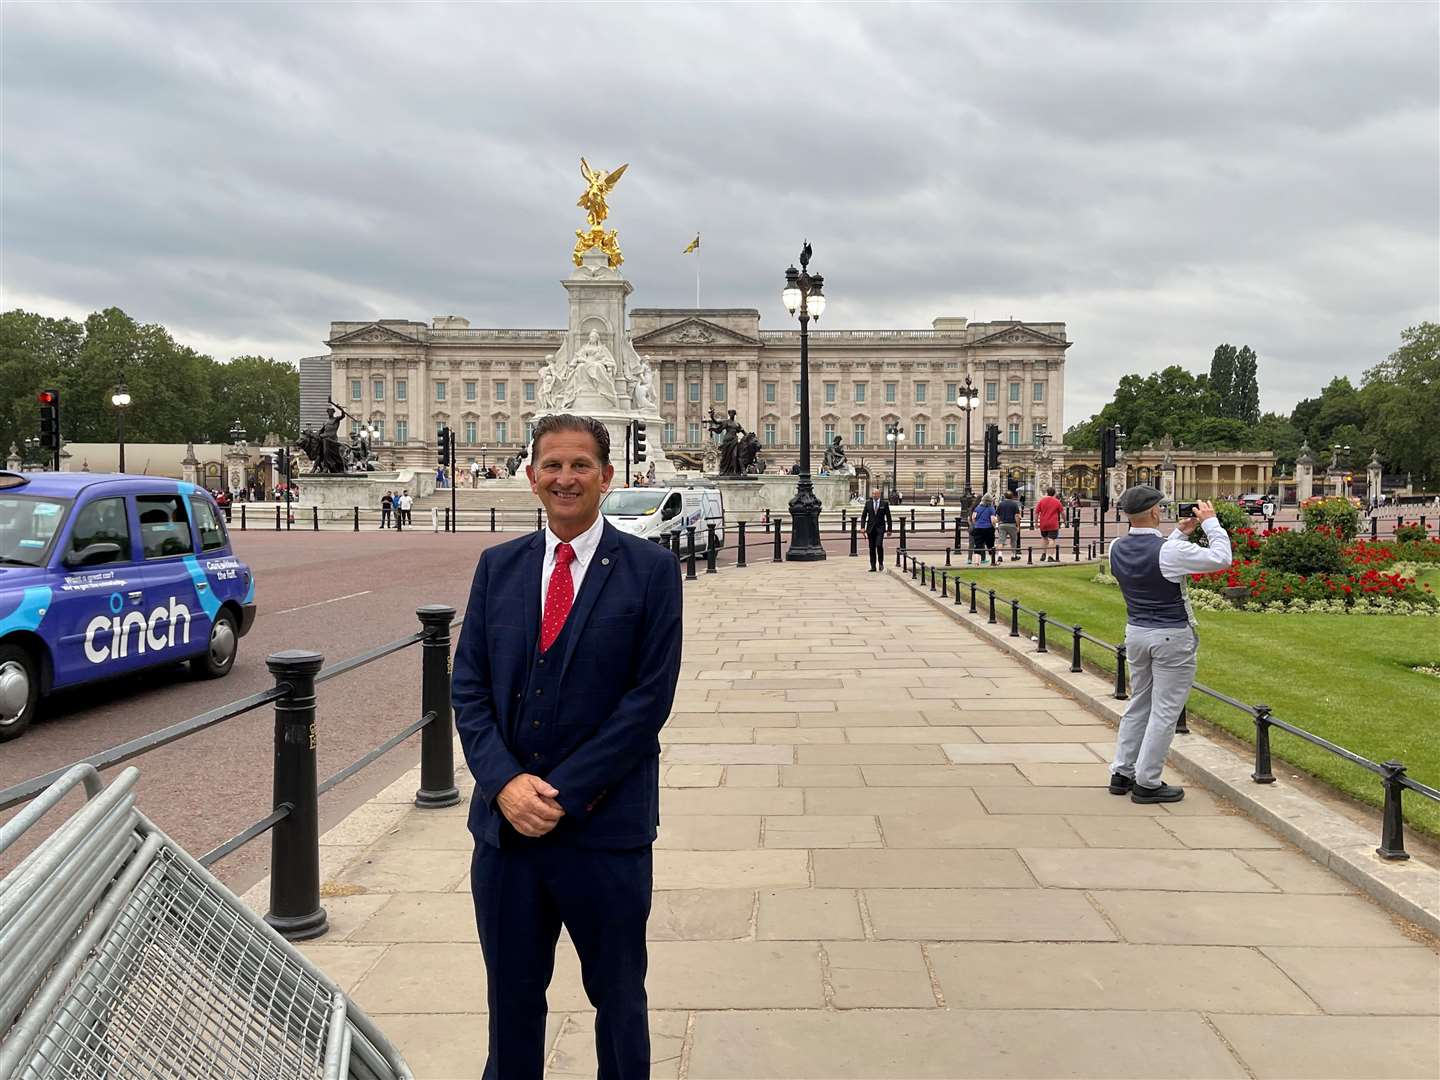 Greenyard Frozen UK's operations director Neil Winner visited Buckingham Palace to celebrate the award in June where he met King Charles